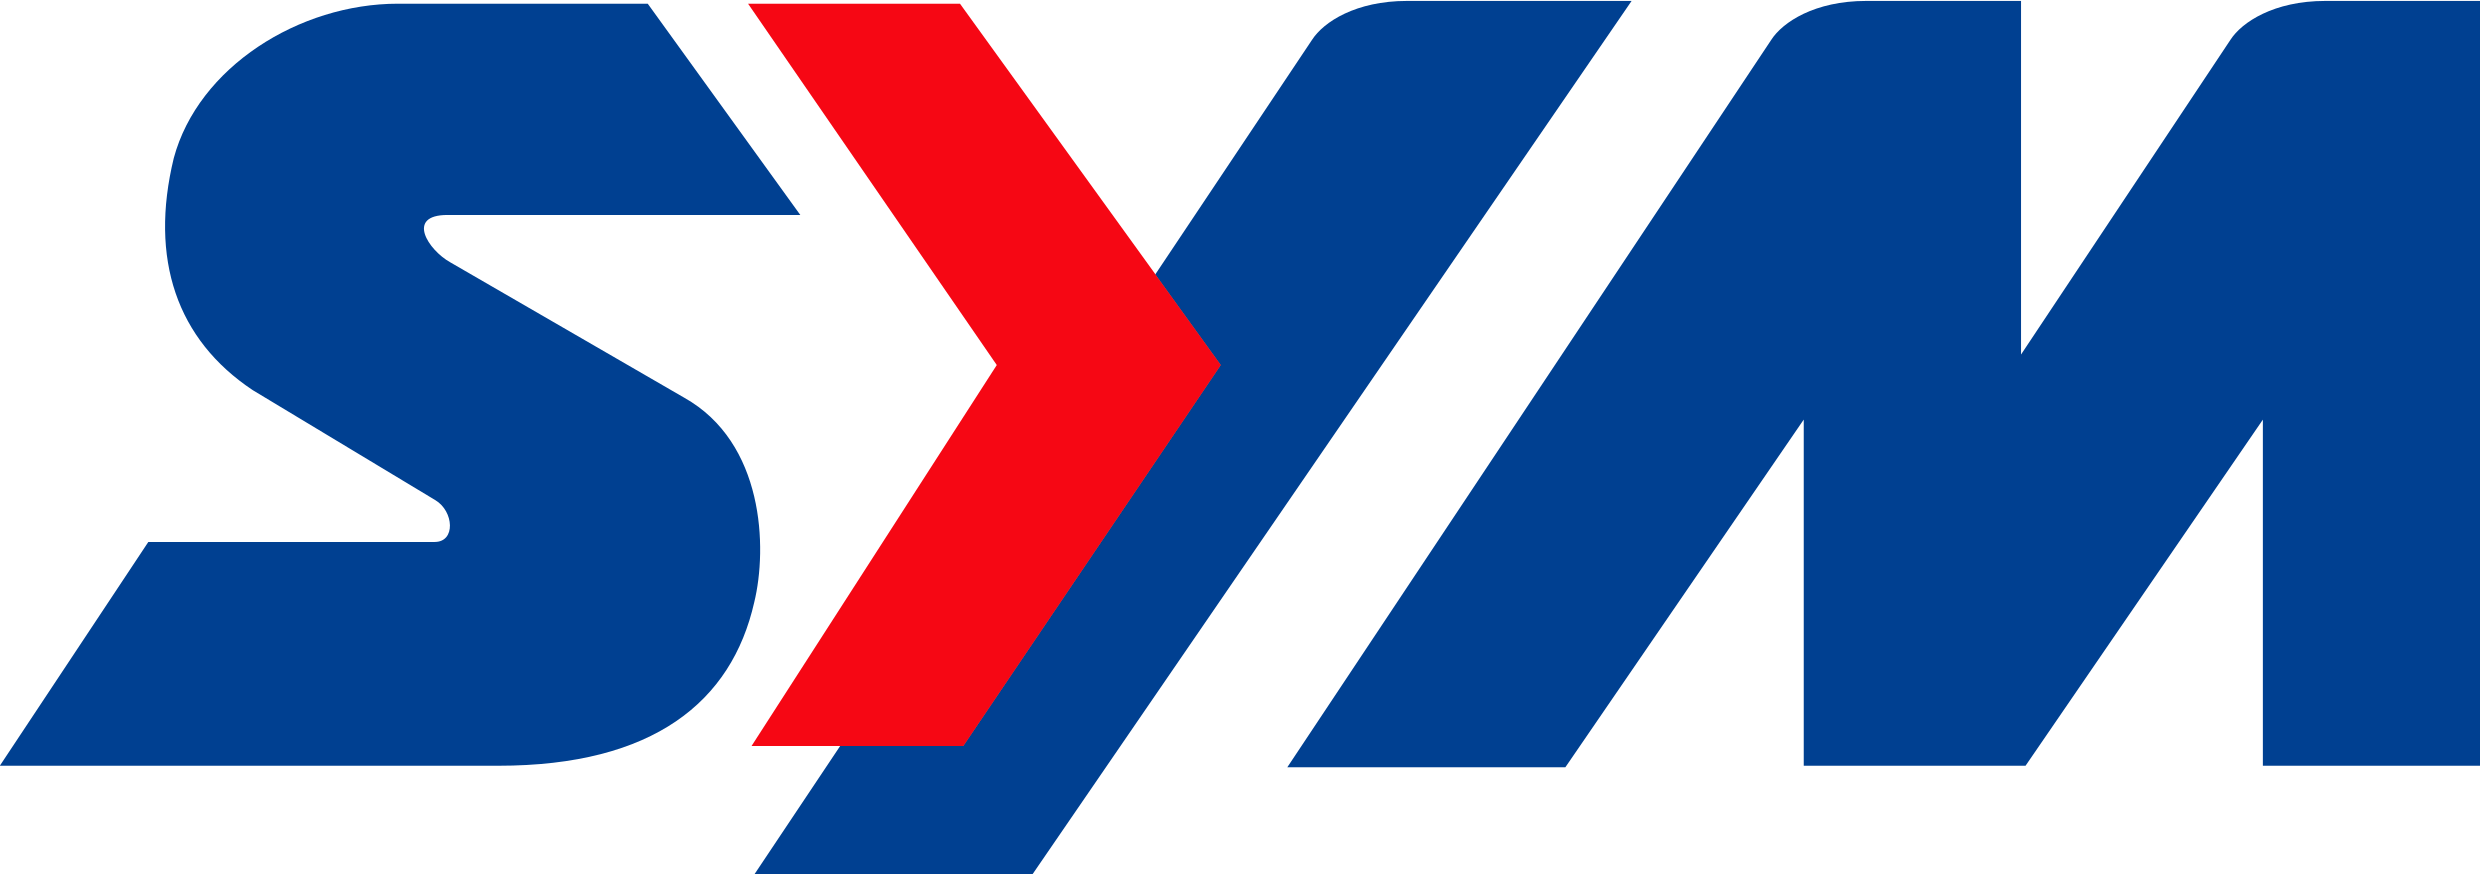 Logo de la marque de scooters et motos SYM